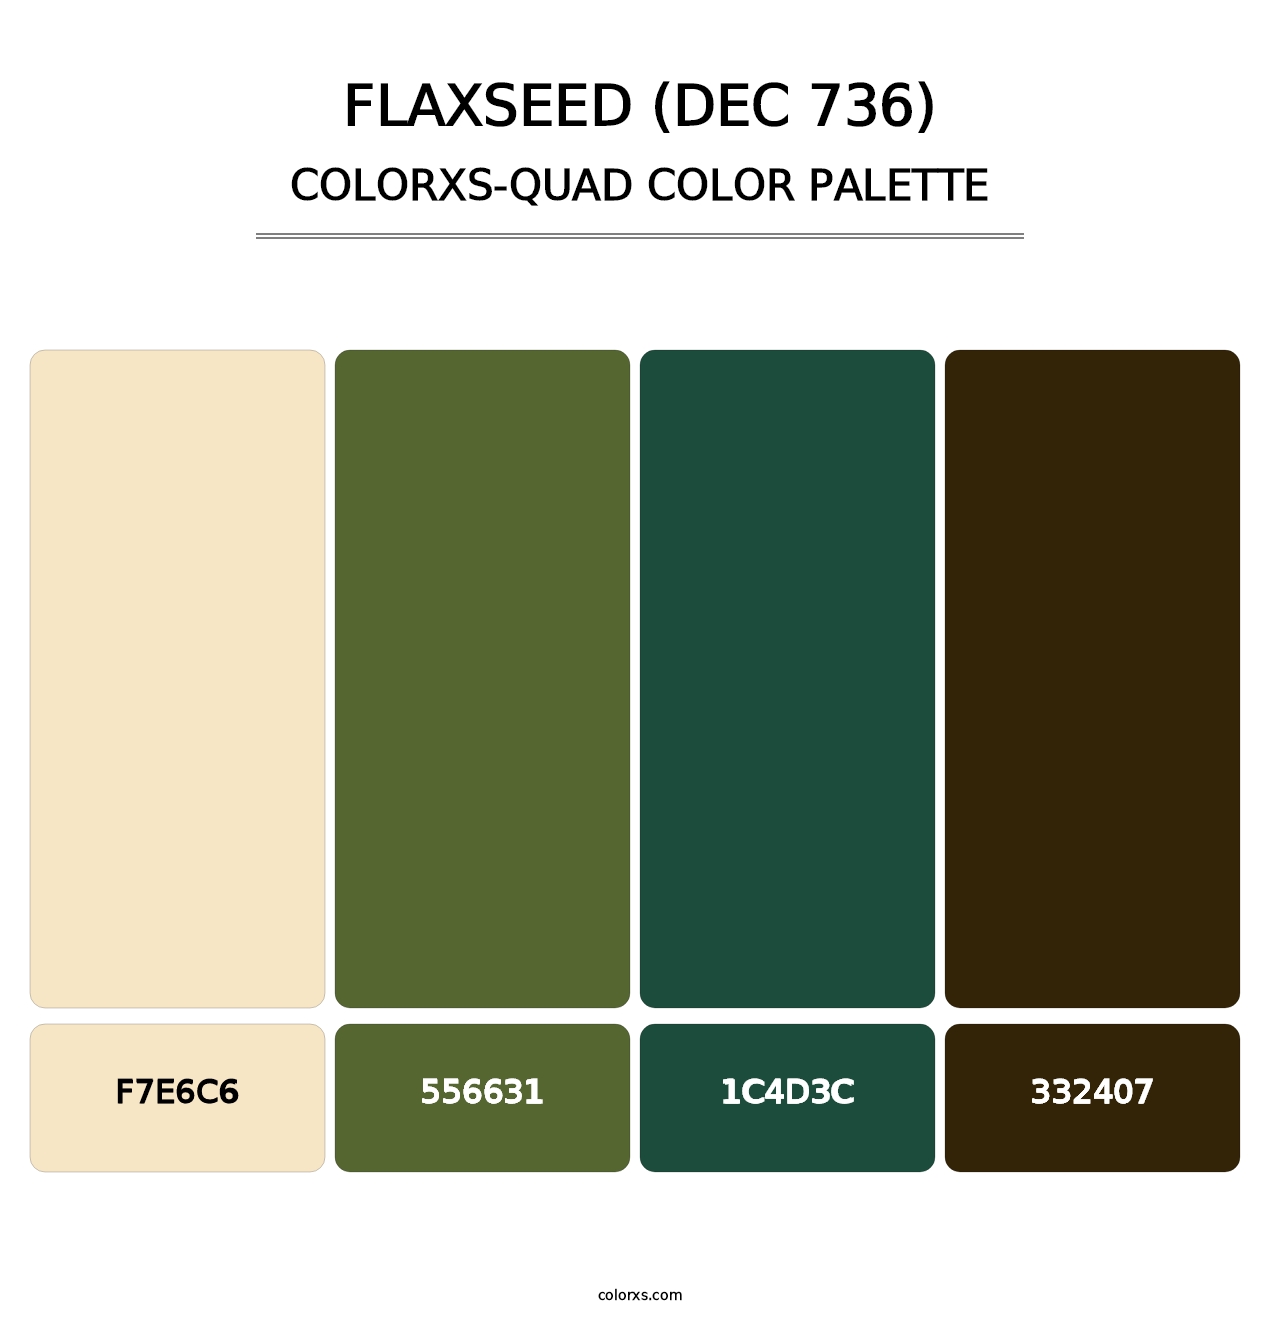 Flaxseed (DEC 736) - Colorxs Quad Palette